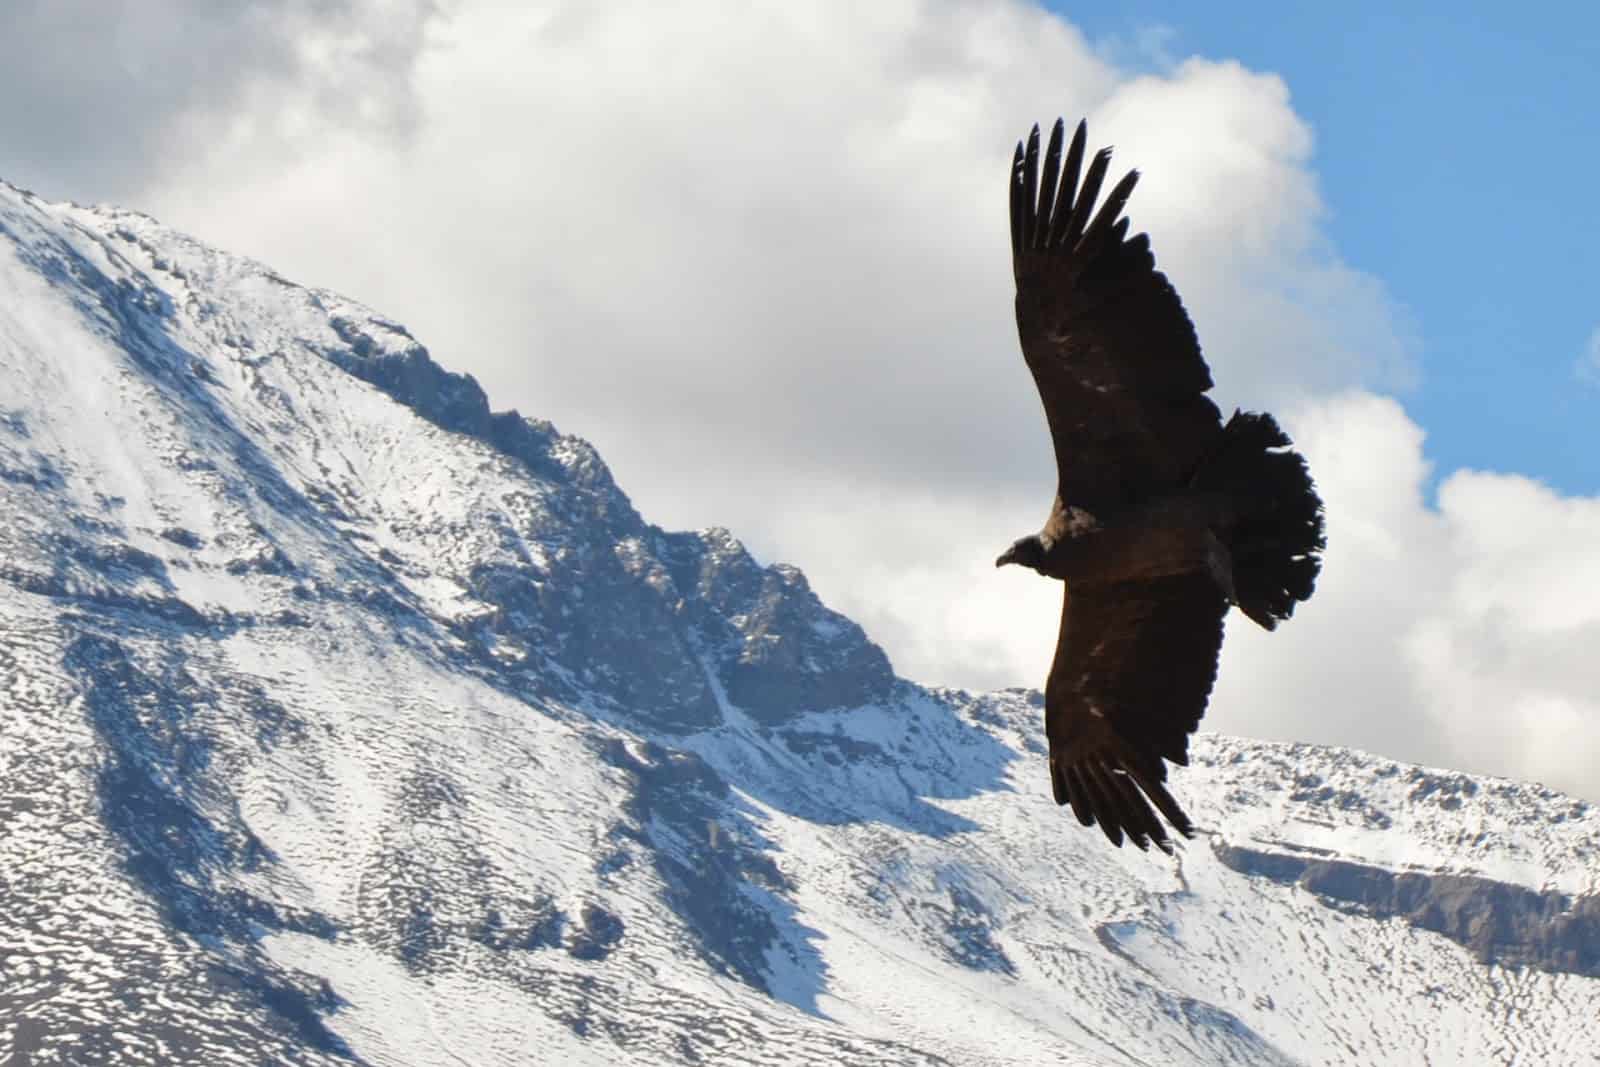 Condor at Valle Nevado, Chile